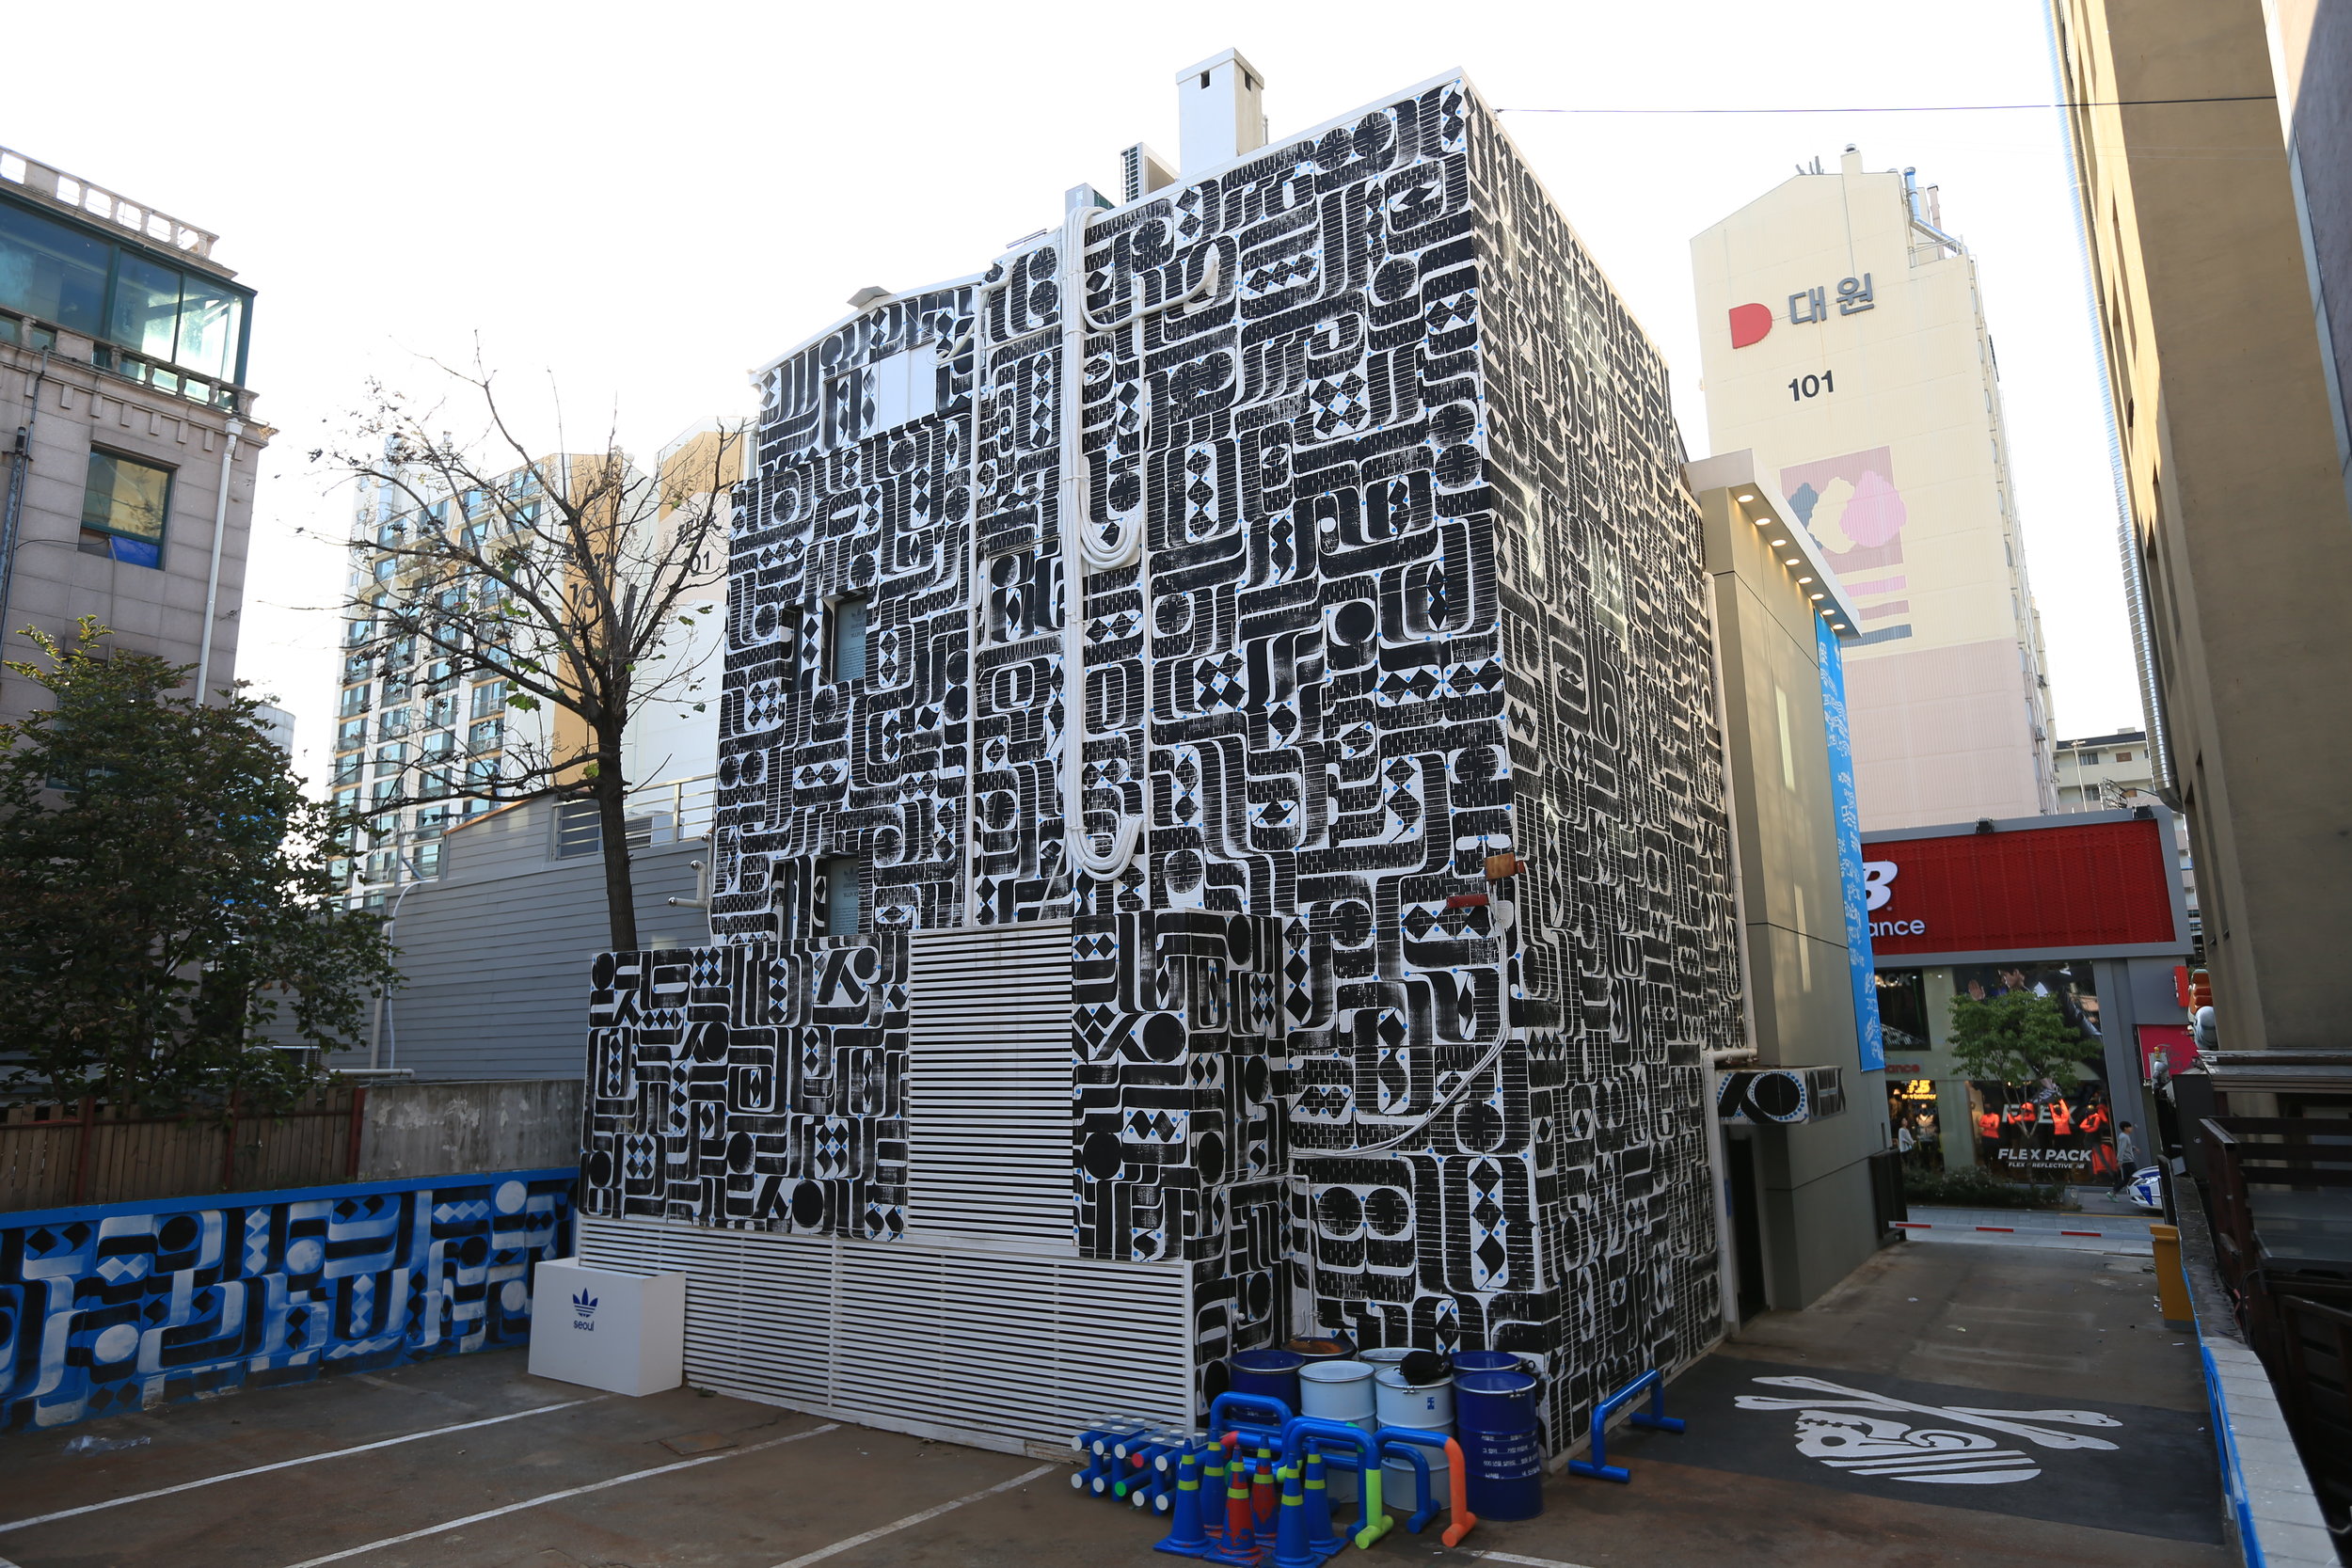  Installation View, Adidas mural commission, Adidas flagship store, Seoul, Korea, 2014 